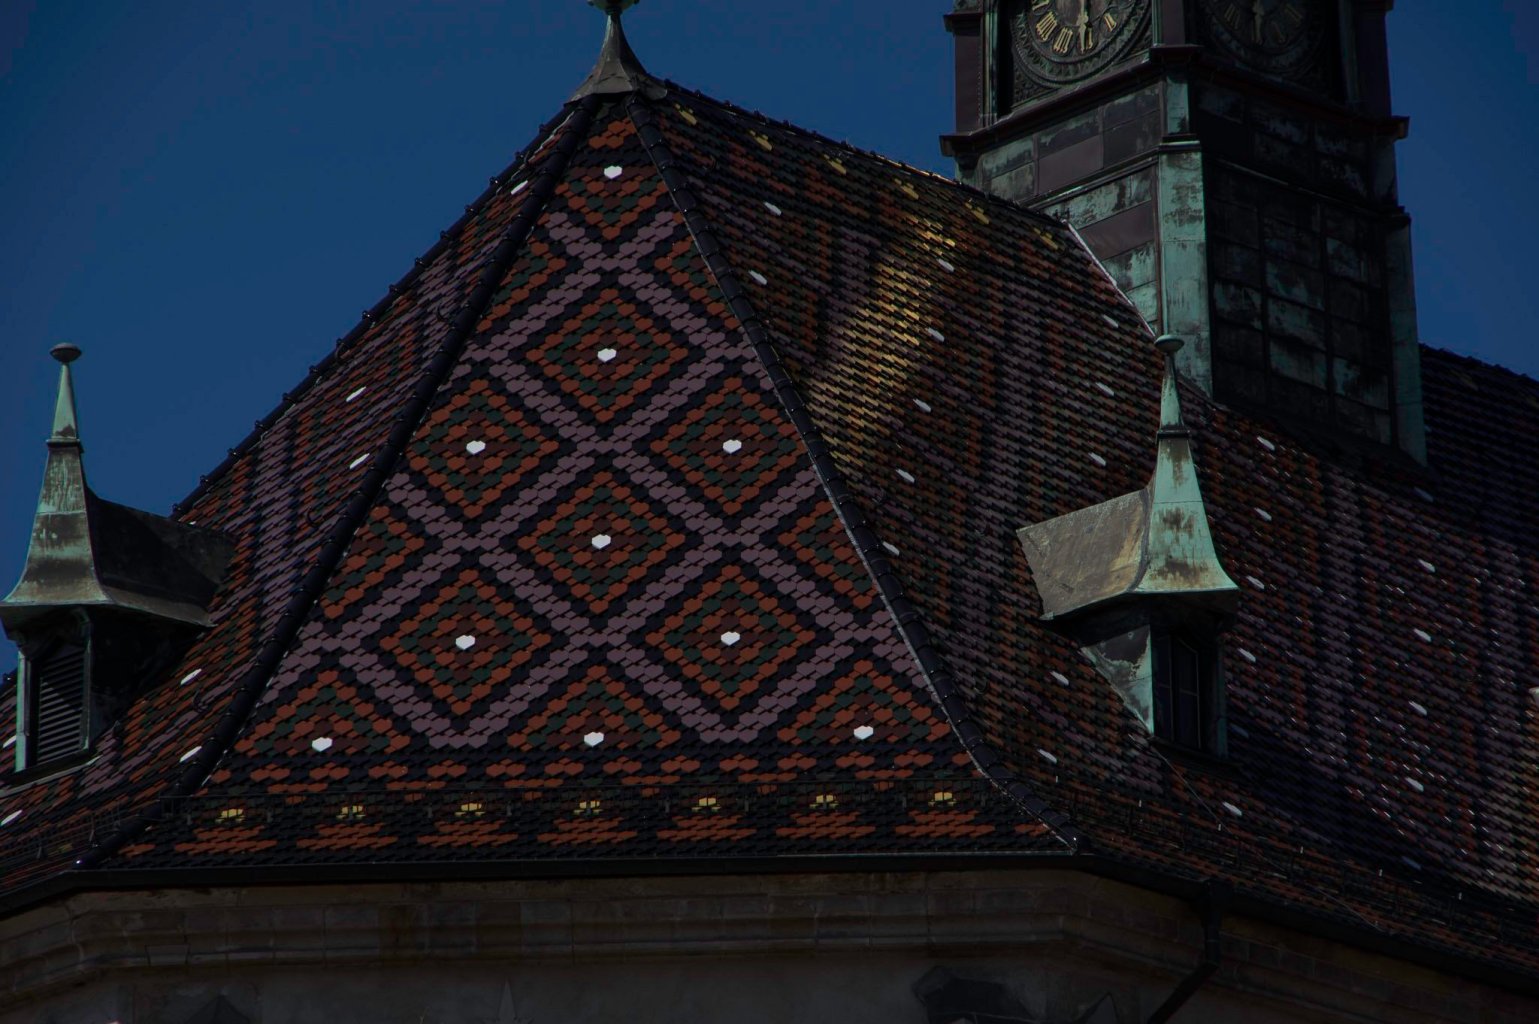 Farbenfrohes Dach der Schlosskirche Wittenberg.